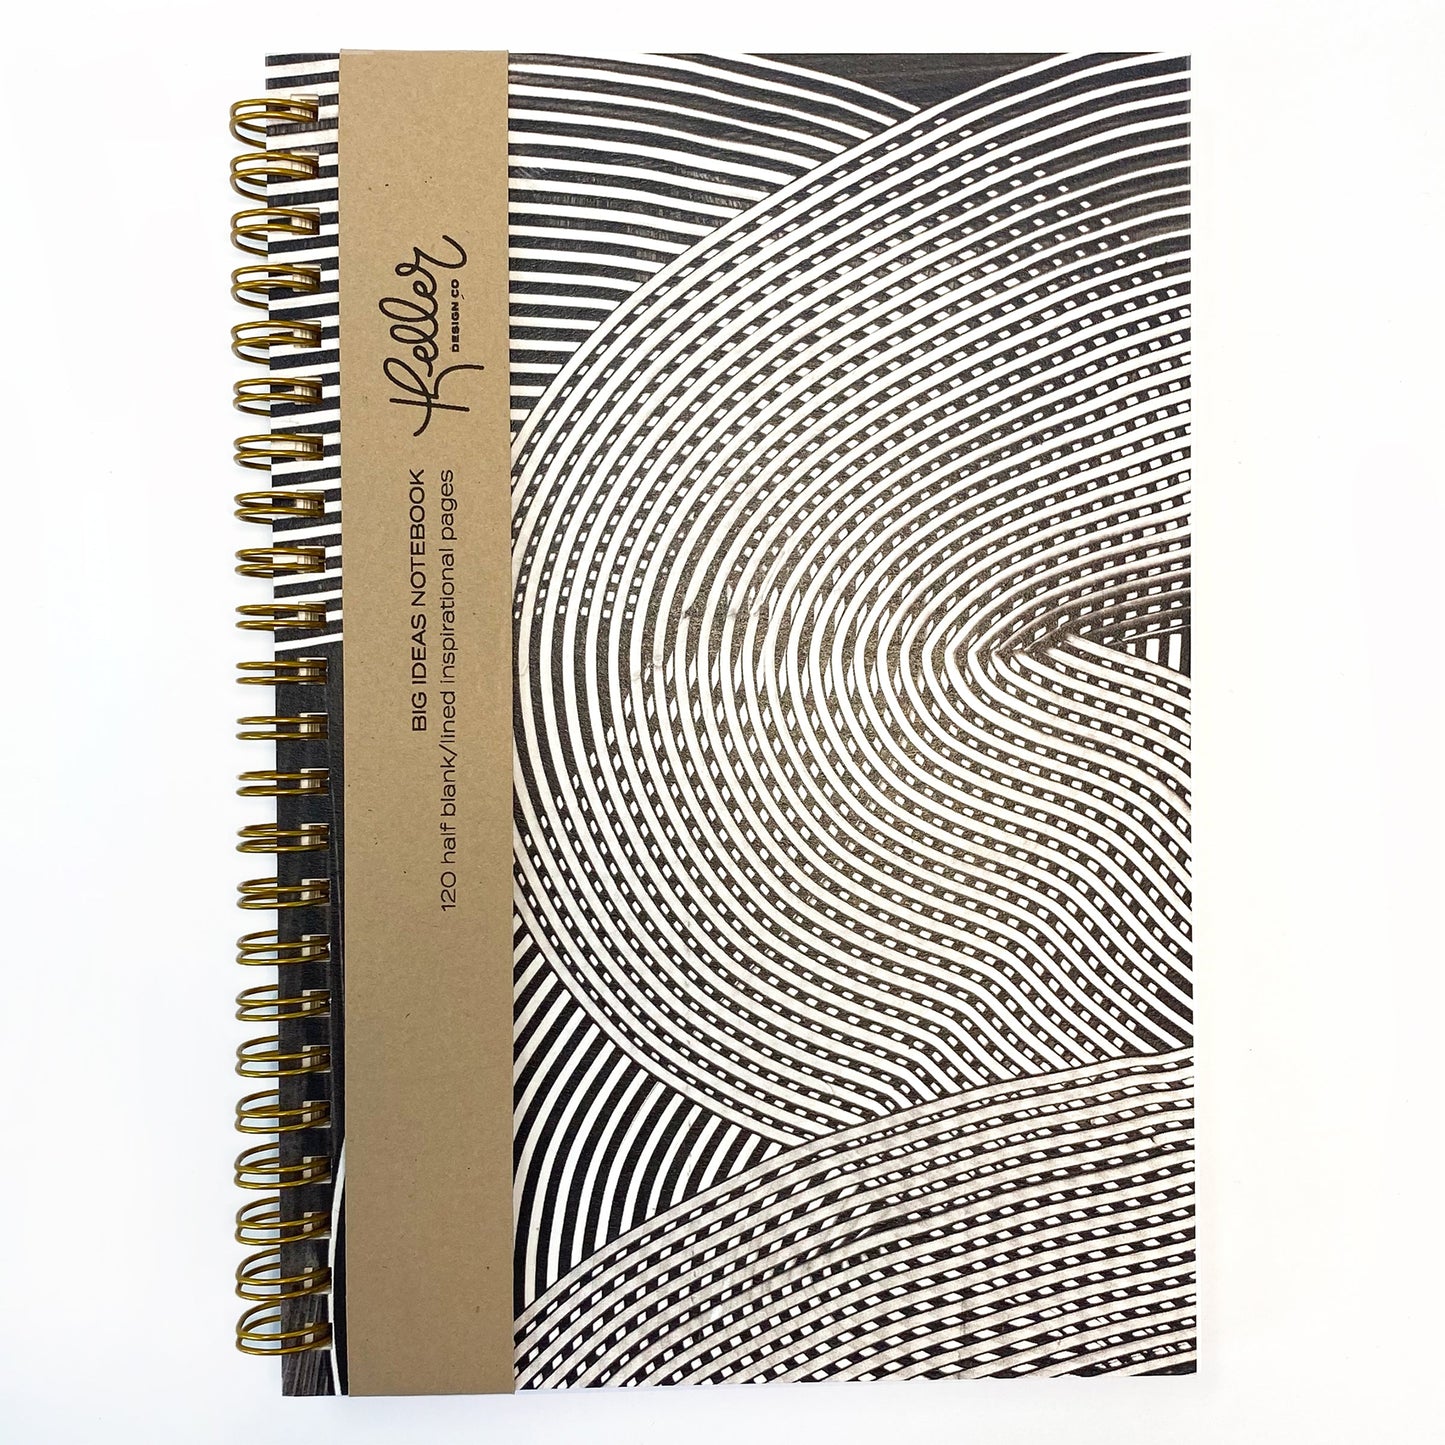 Curves Ahead: Black No.1-5.5”x8”- Big Ideas Spiral Bound Notebook